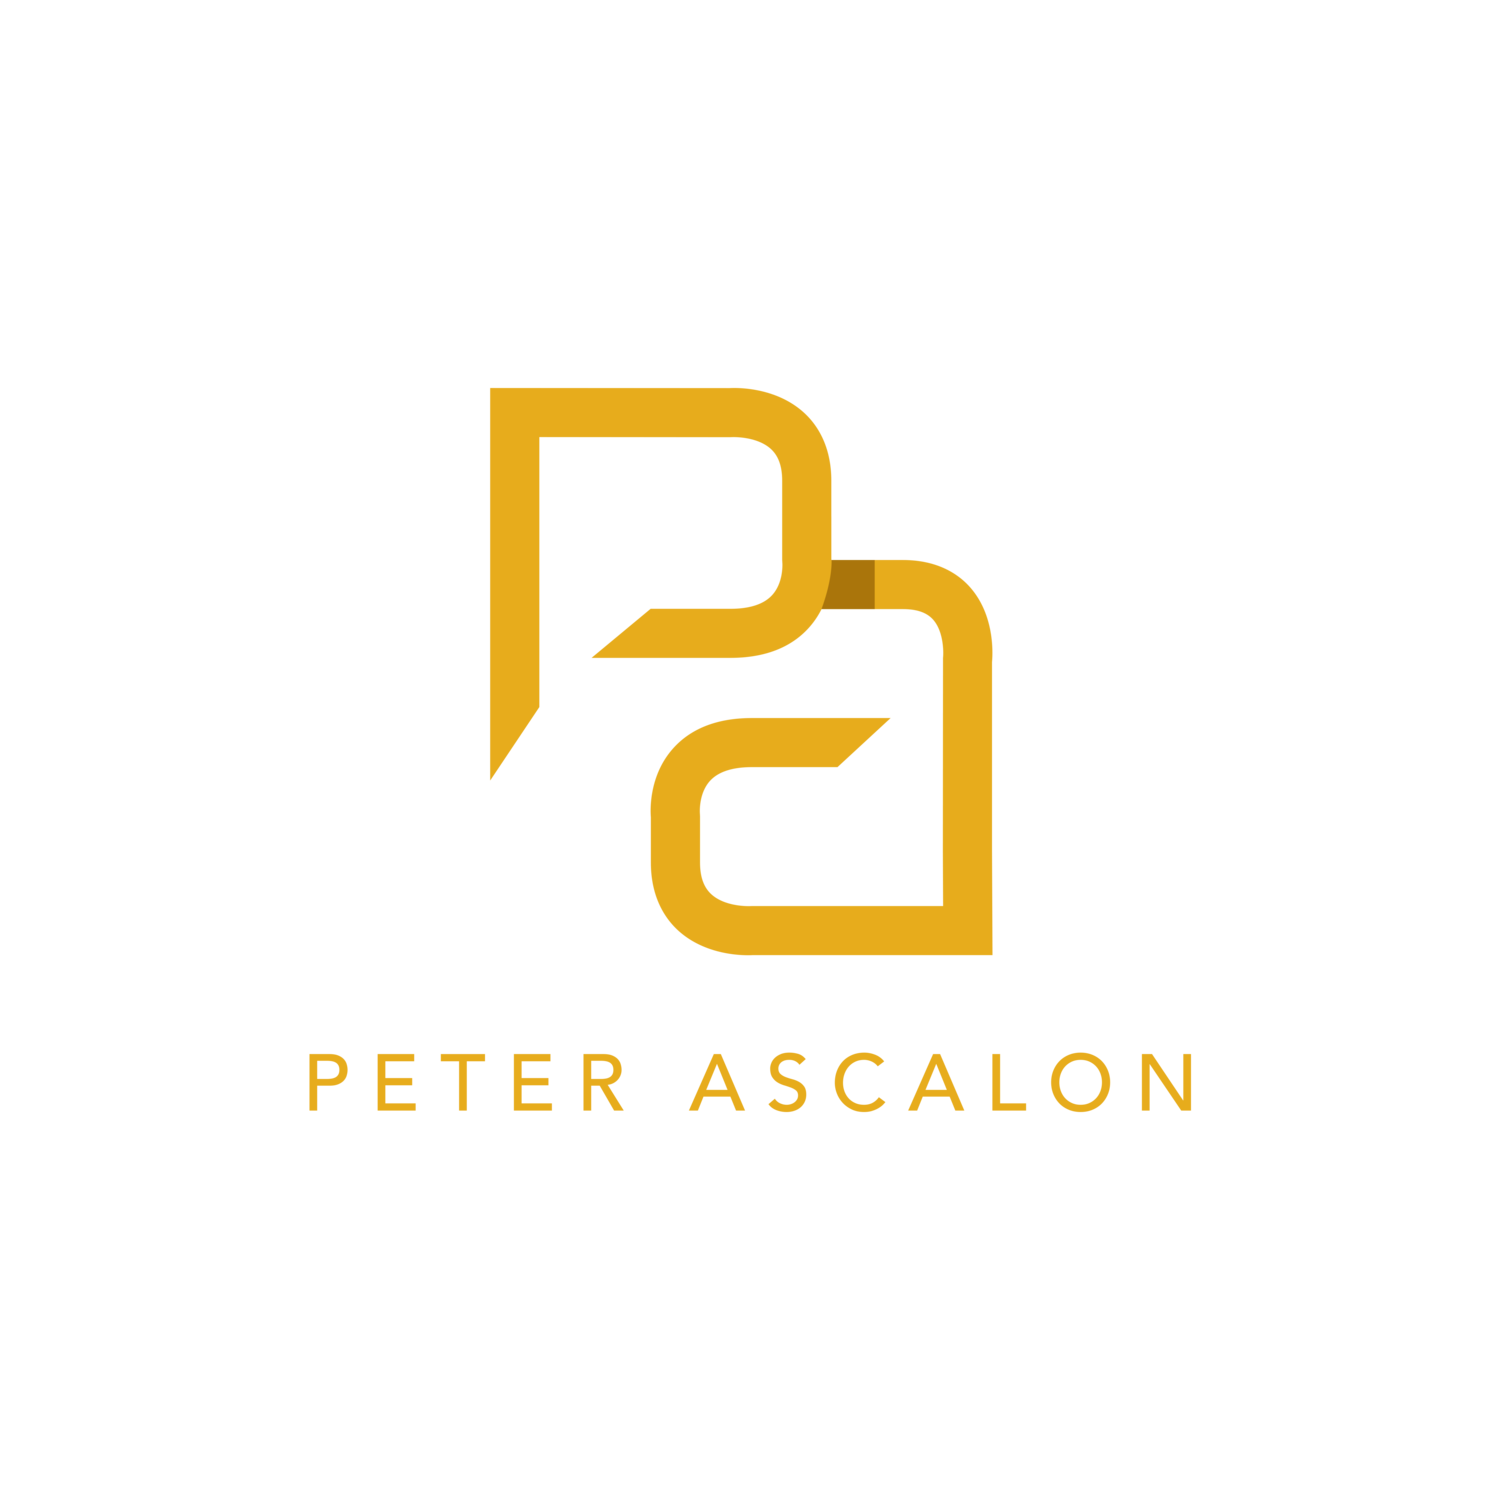 PETER ASCALON